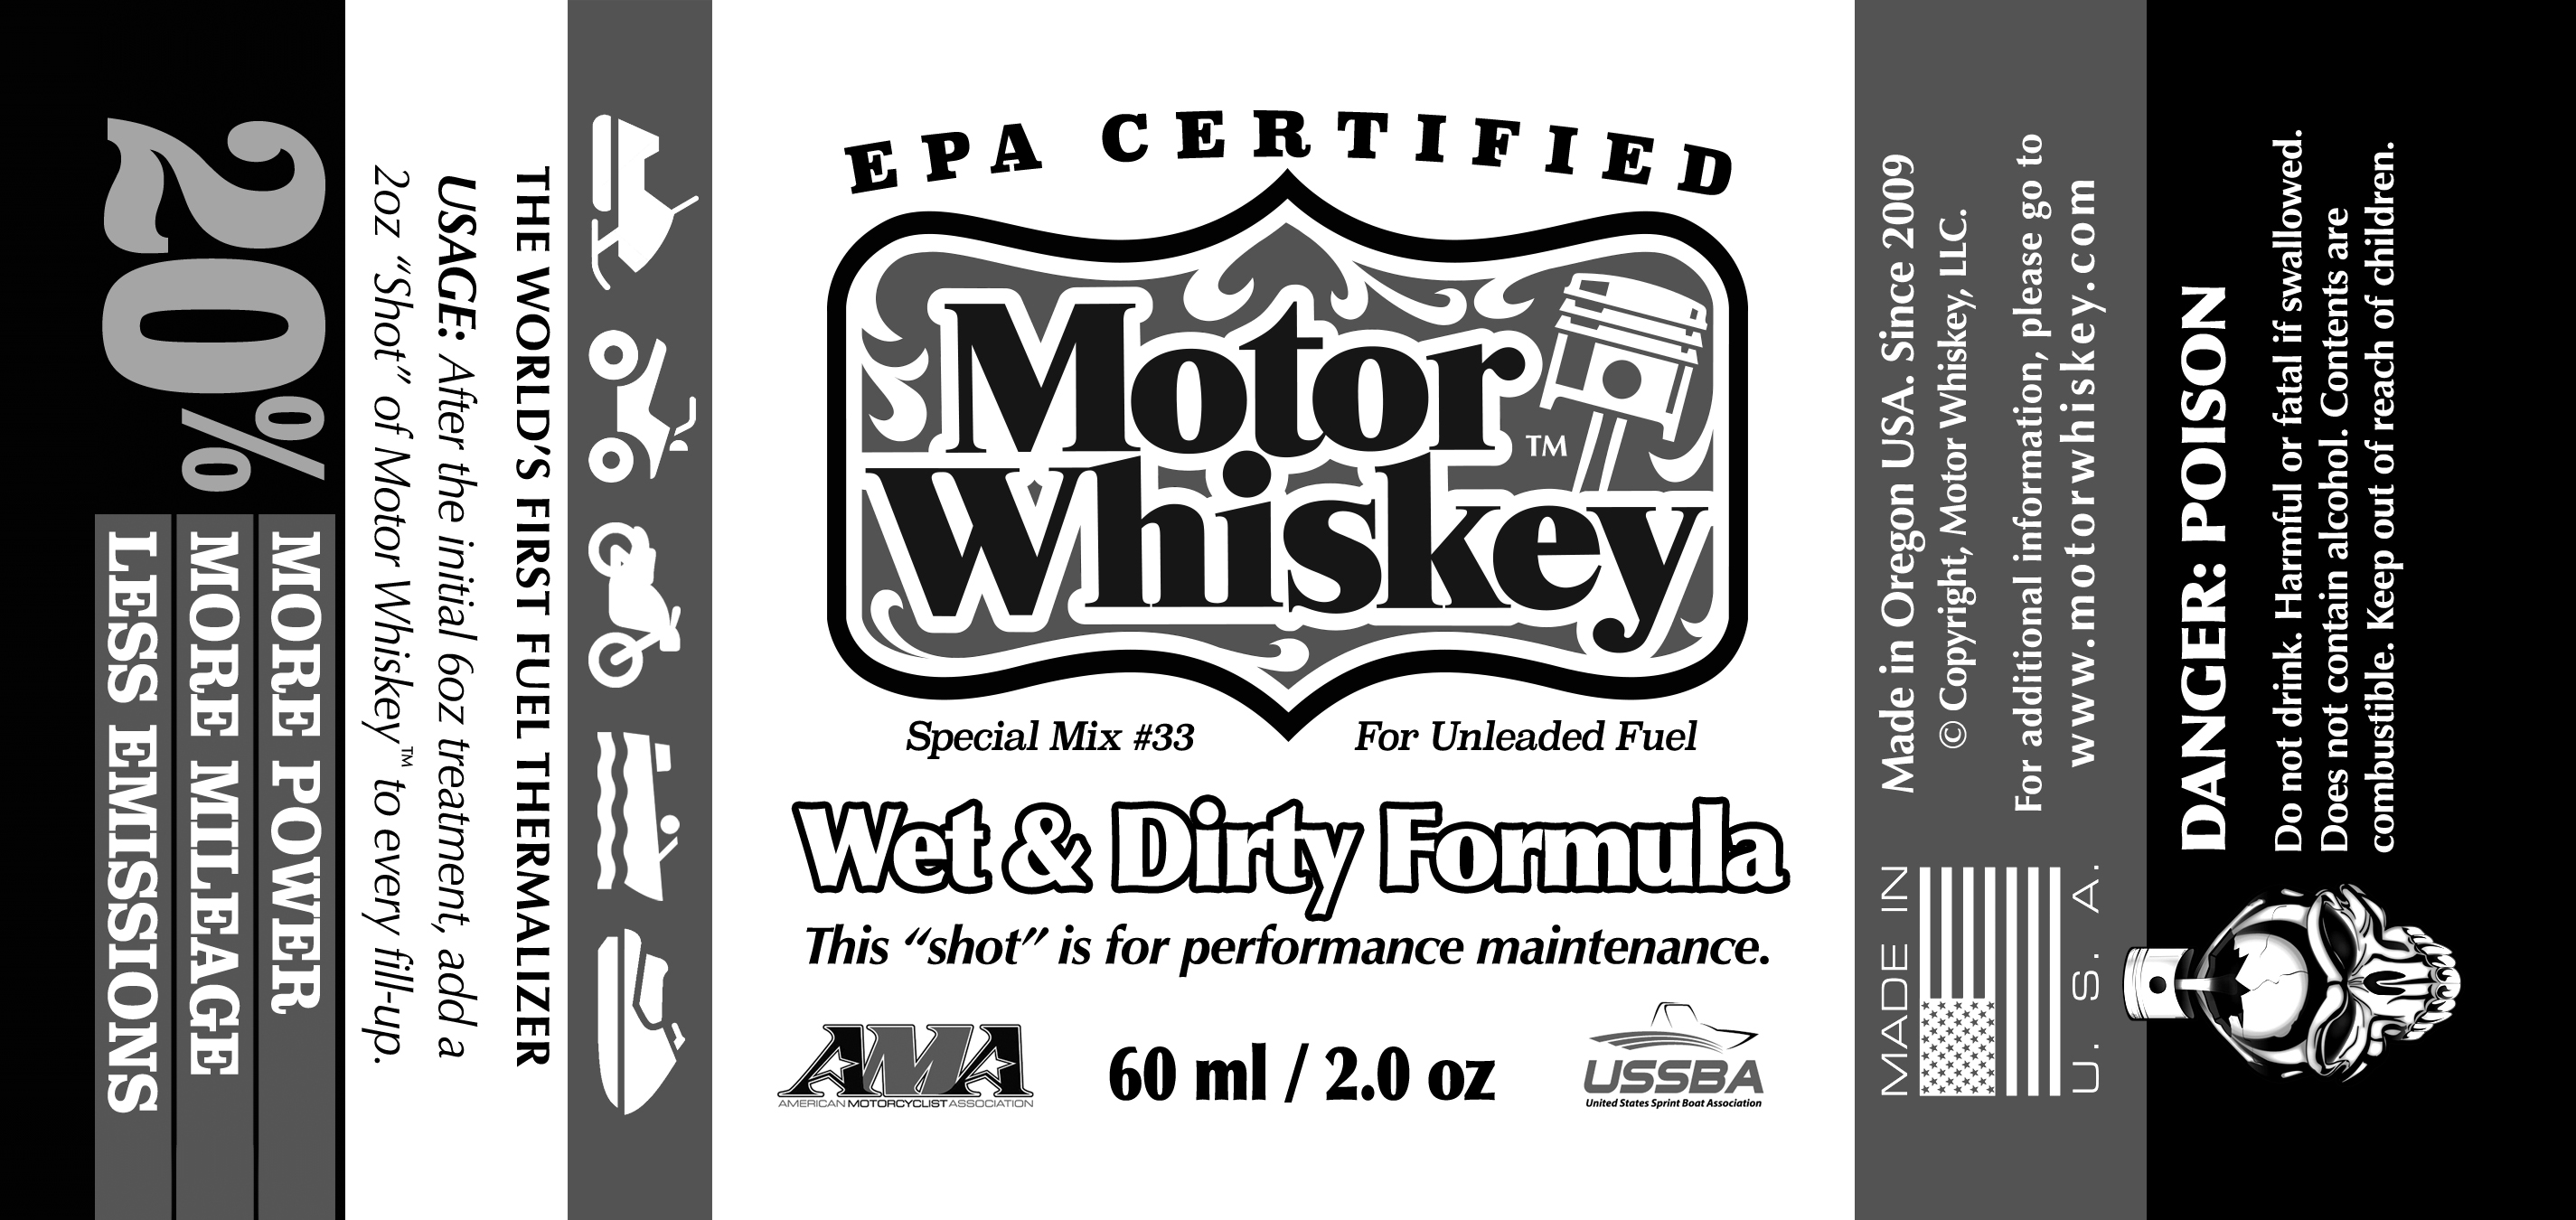 Motor Whiskey Labels